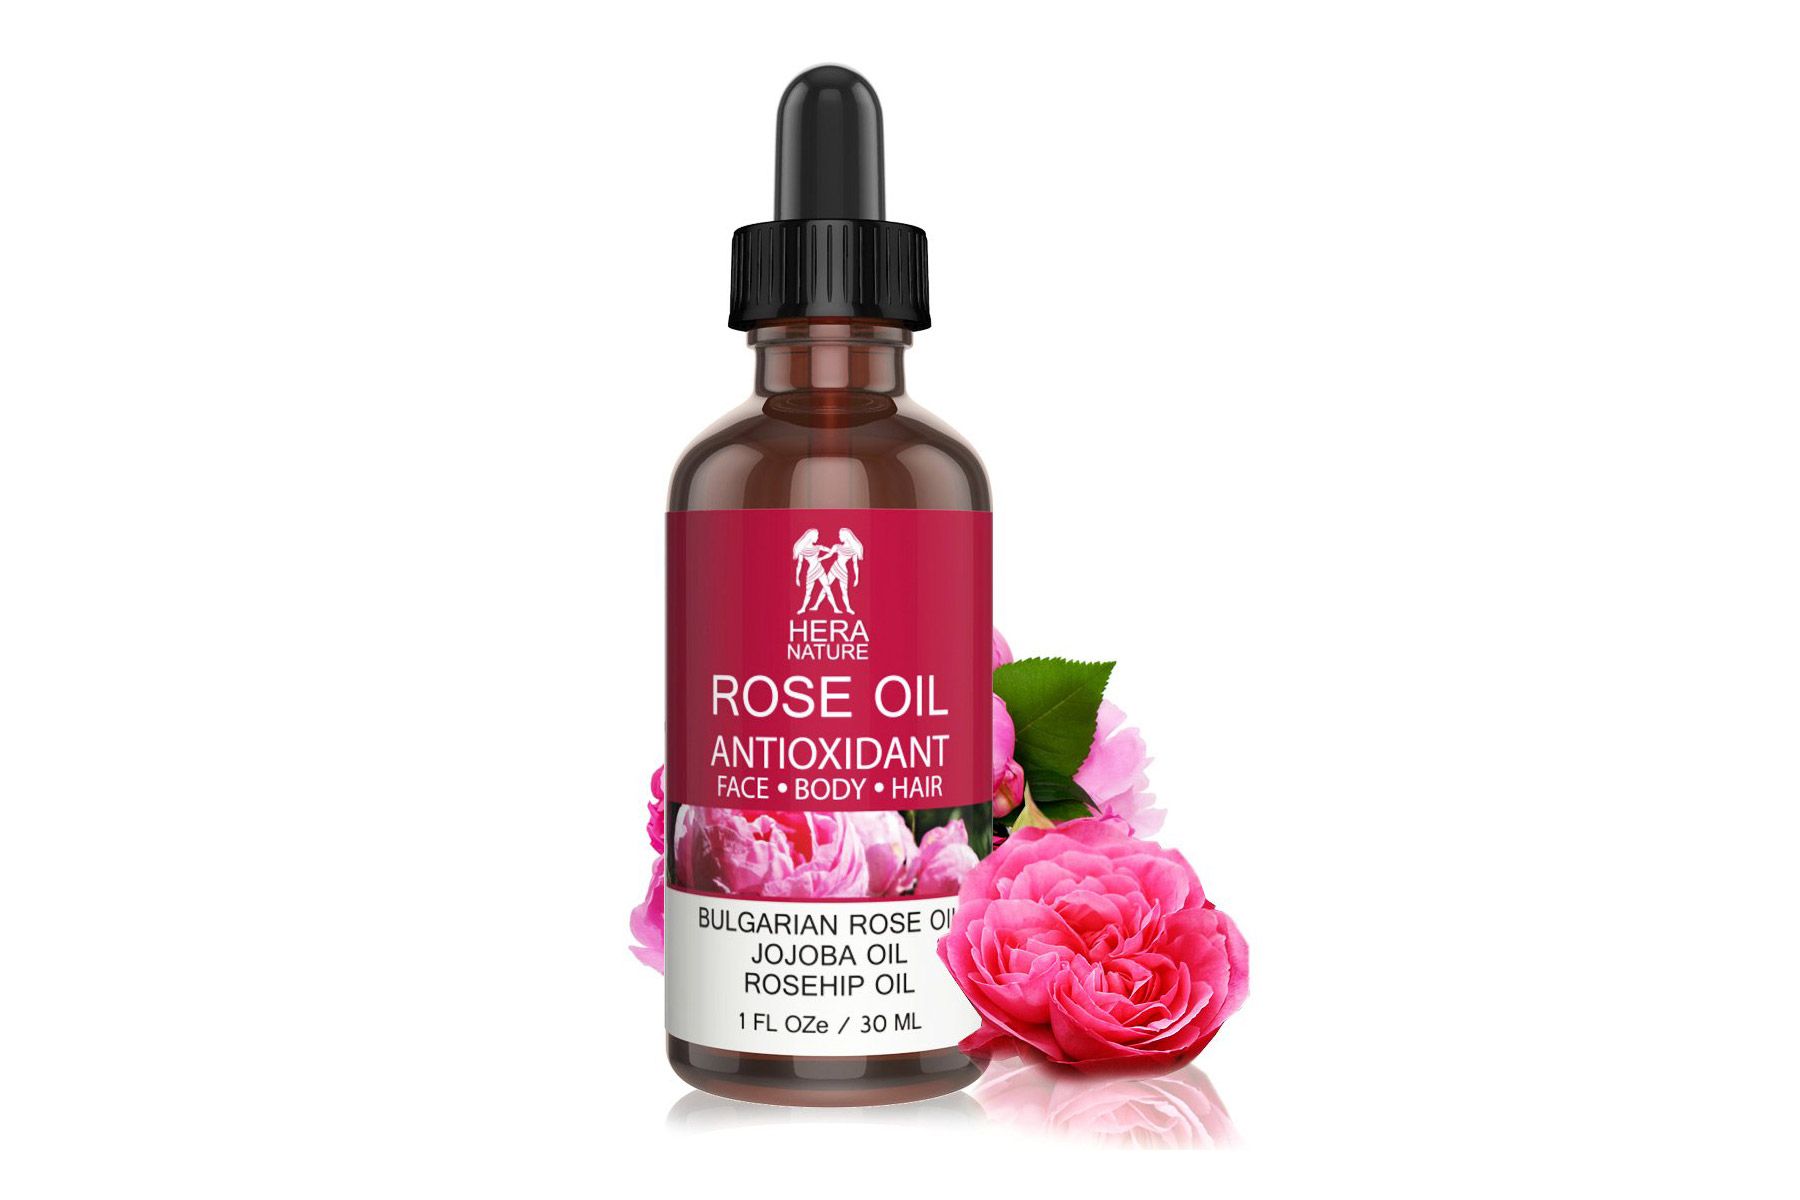 Hera Nature’s Antioxidant Rose Oil